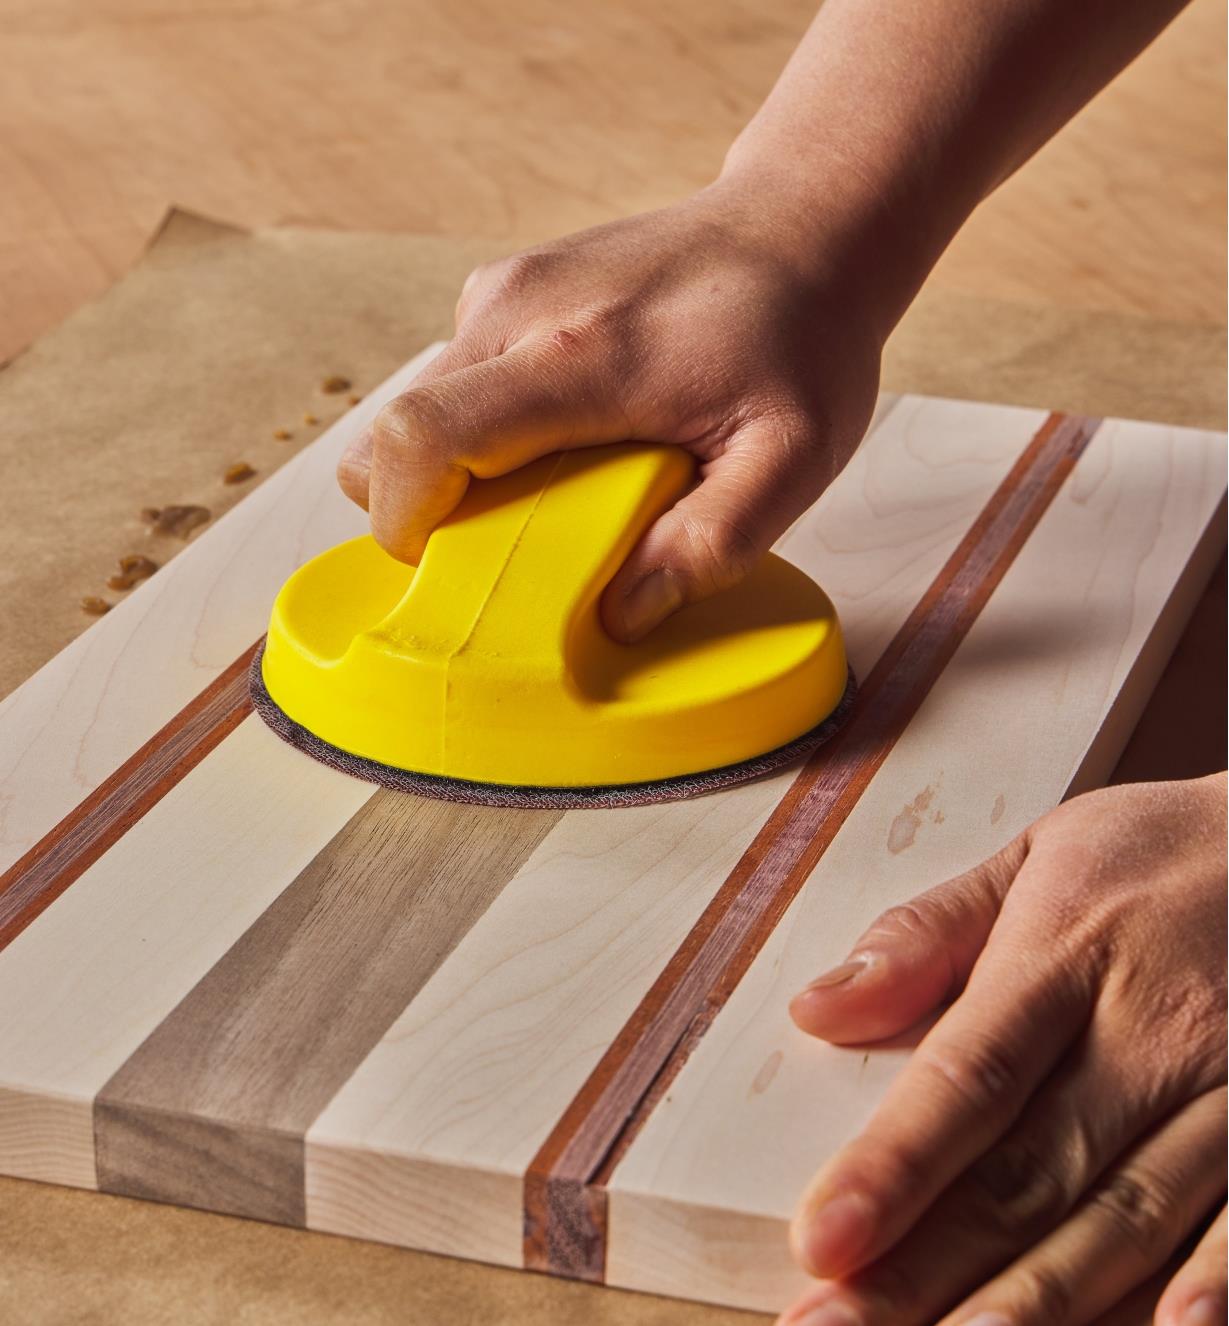 Sanding the cutting board